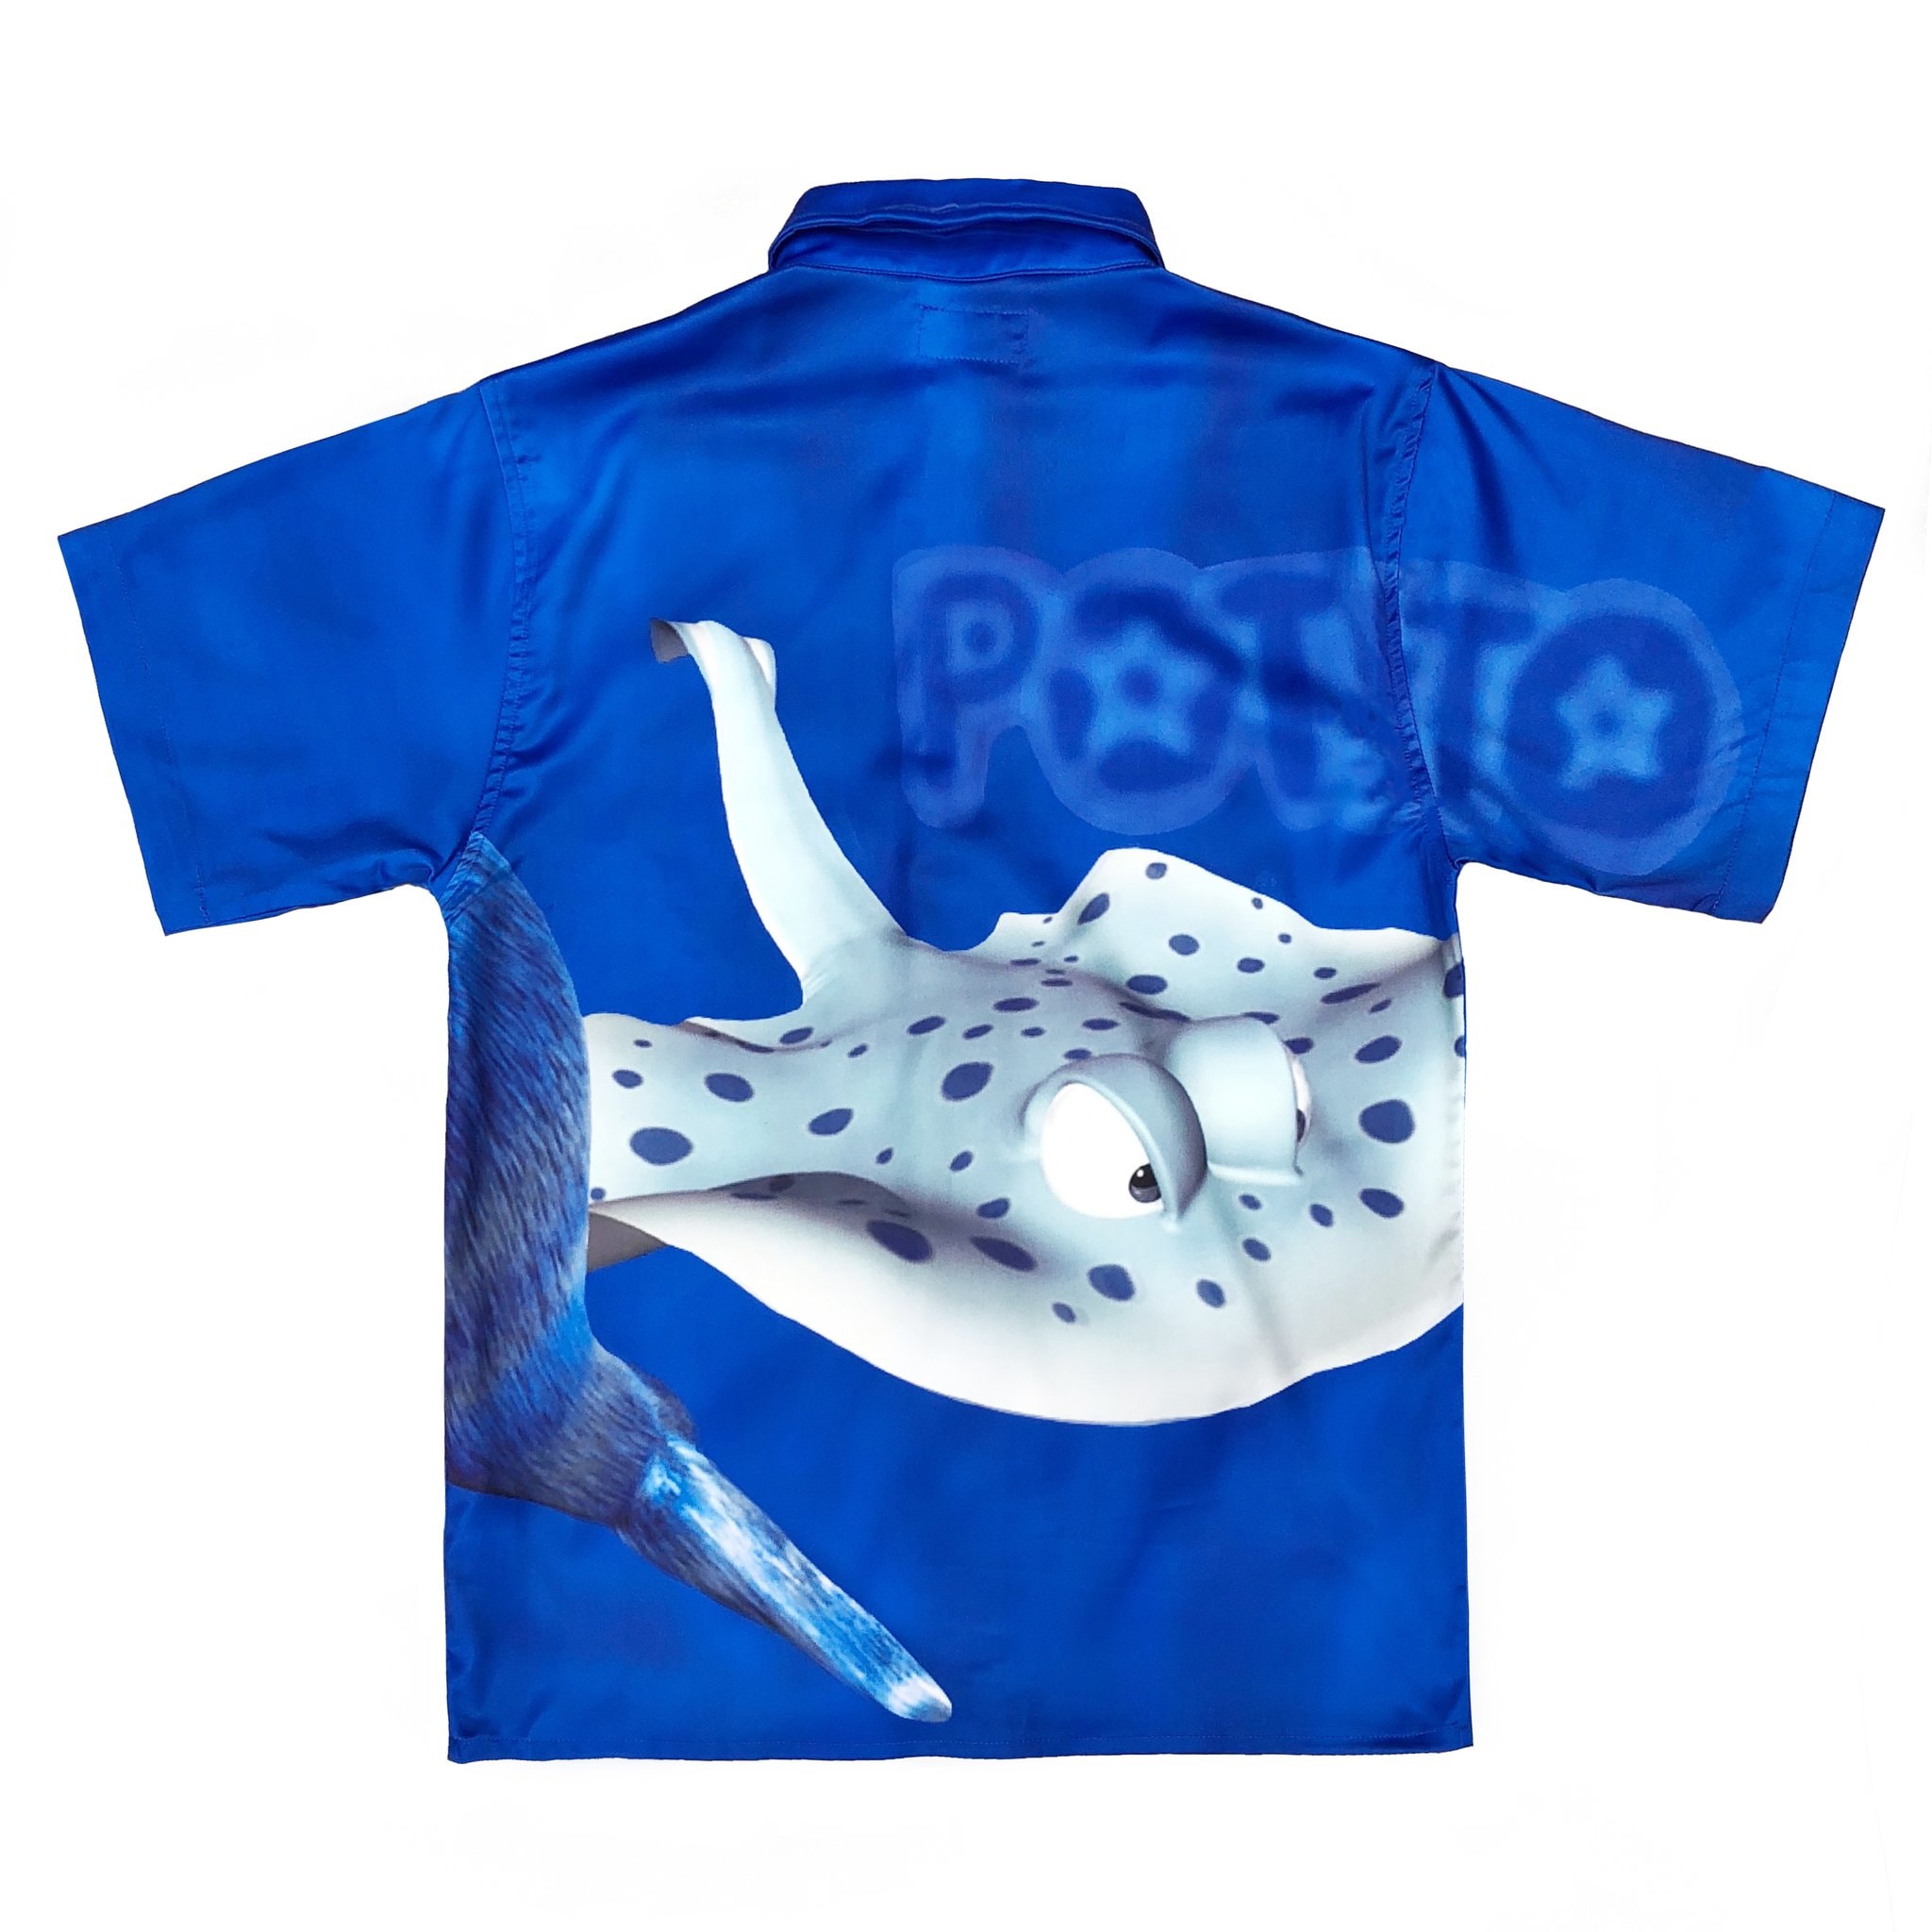 imran potato donkey kong country seal parody shirt blue back